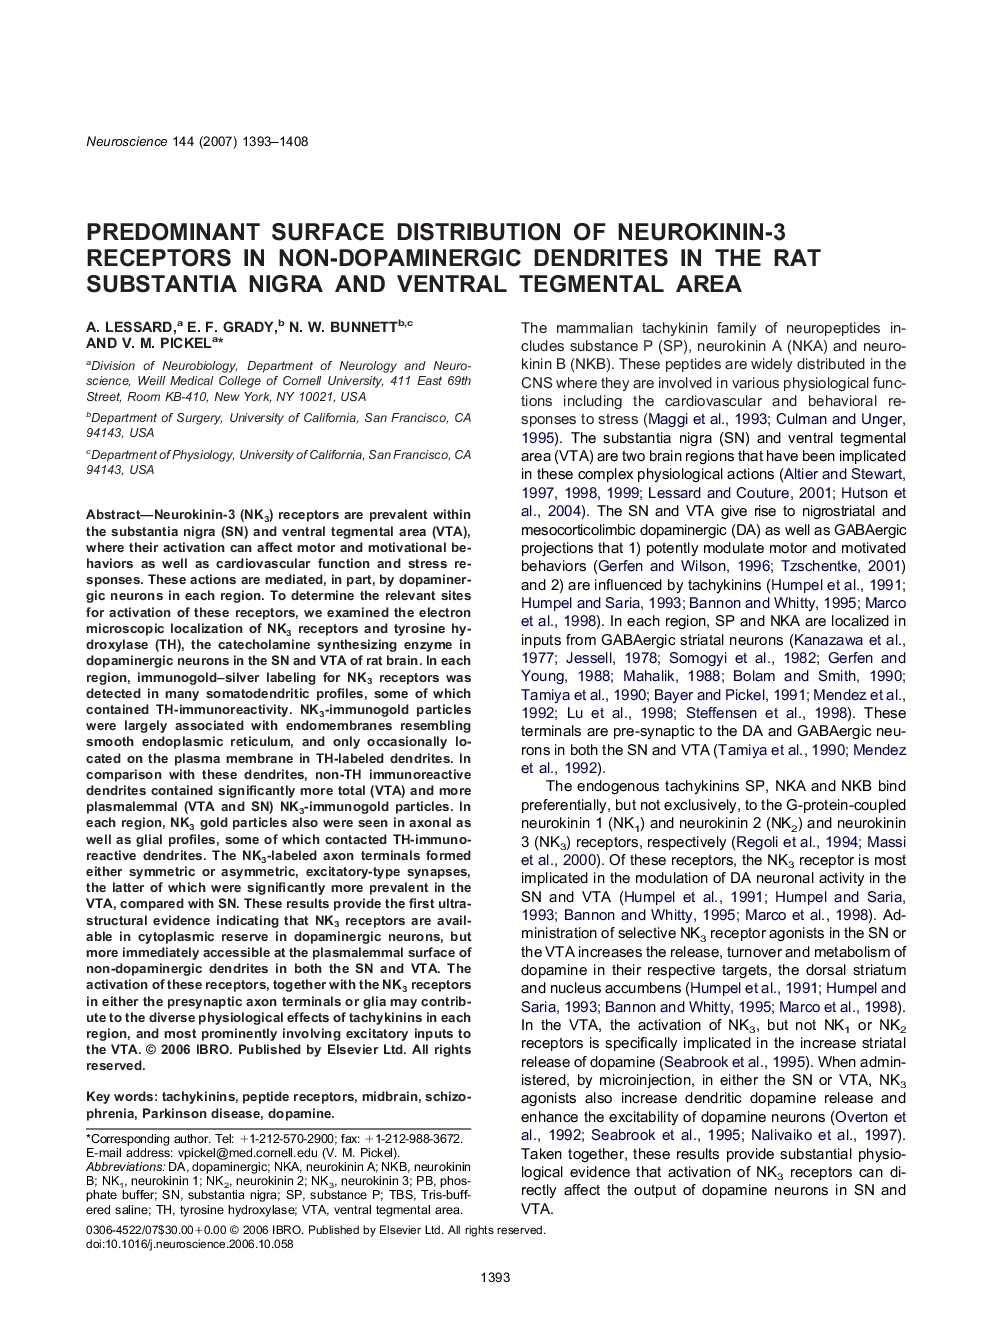 Predominant surface distribution of neurokinin-3 receptors in non-dopaminergic dendrites in the rat substantia nigra and ventral tegmental area